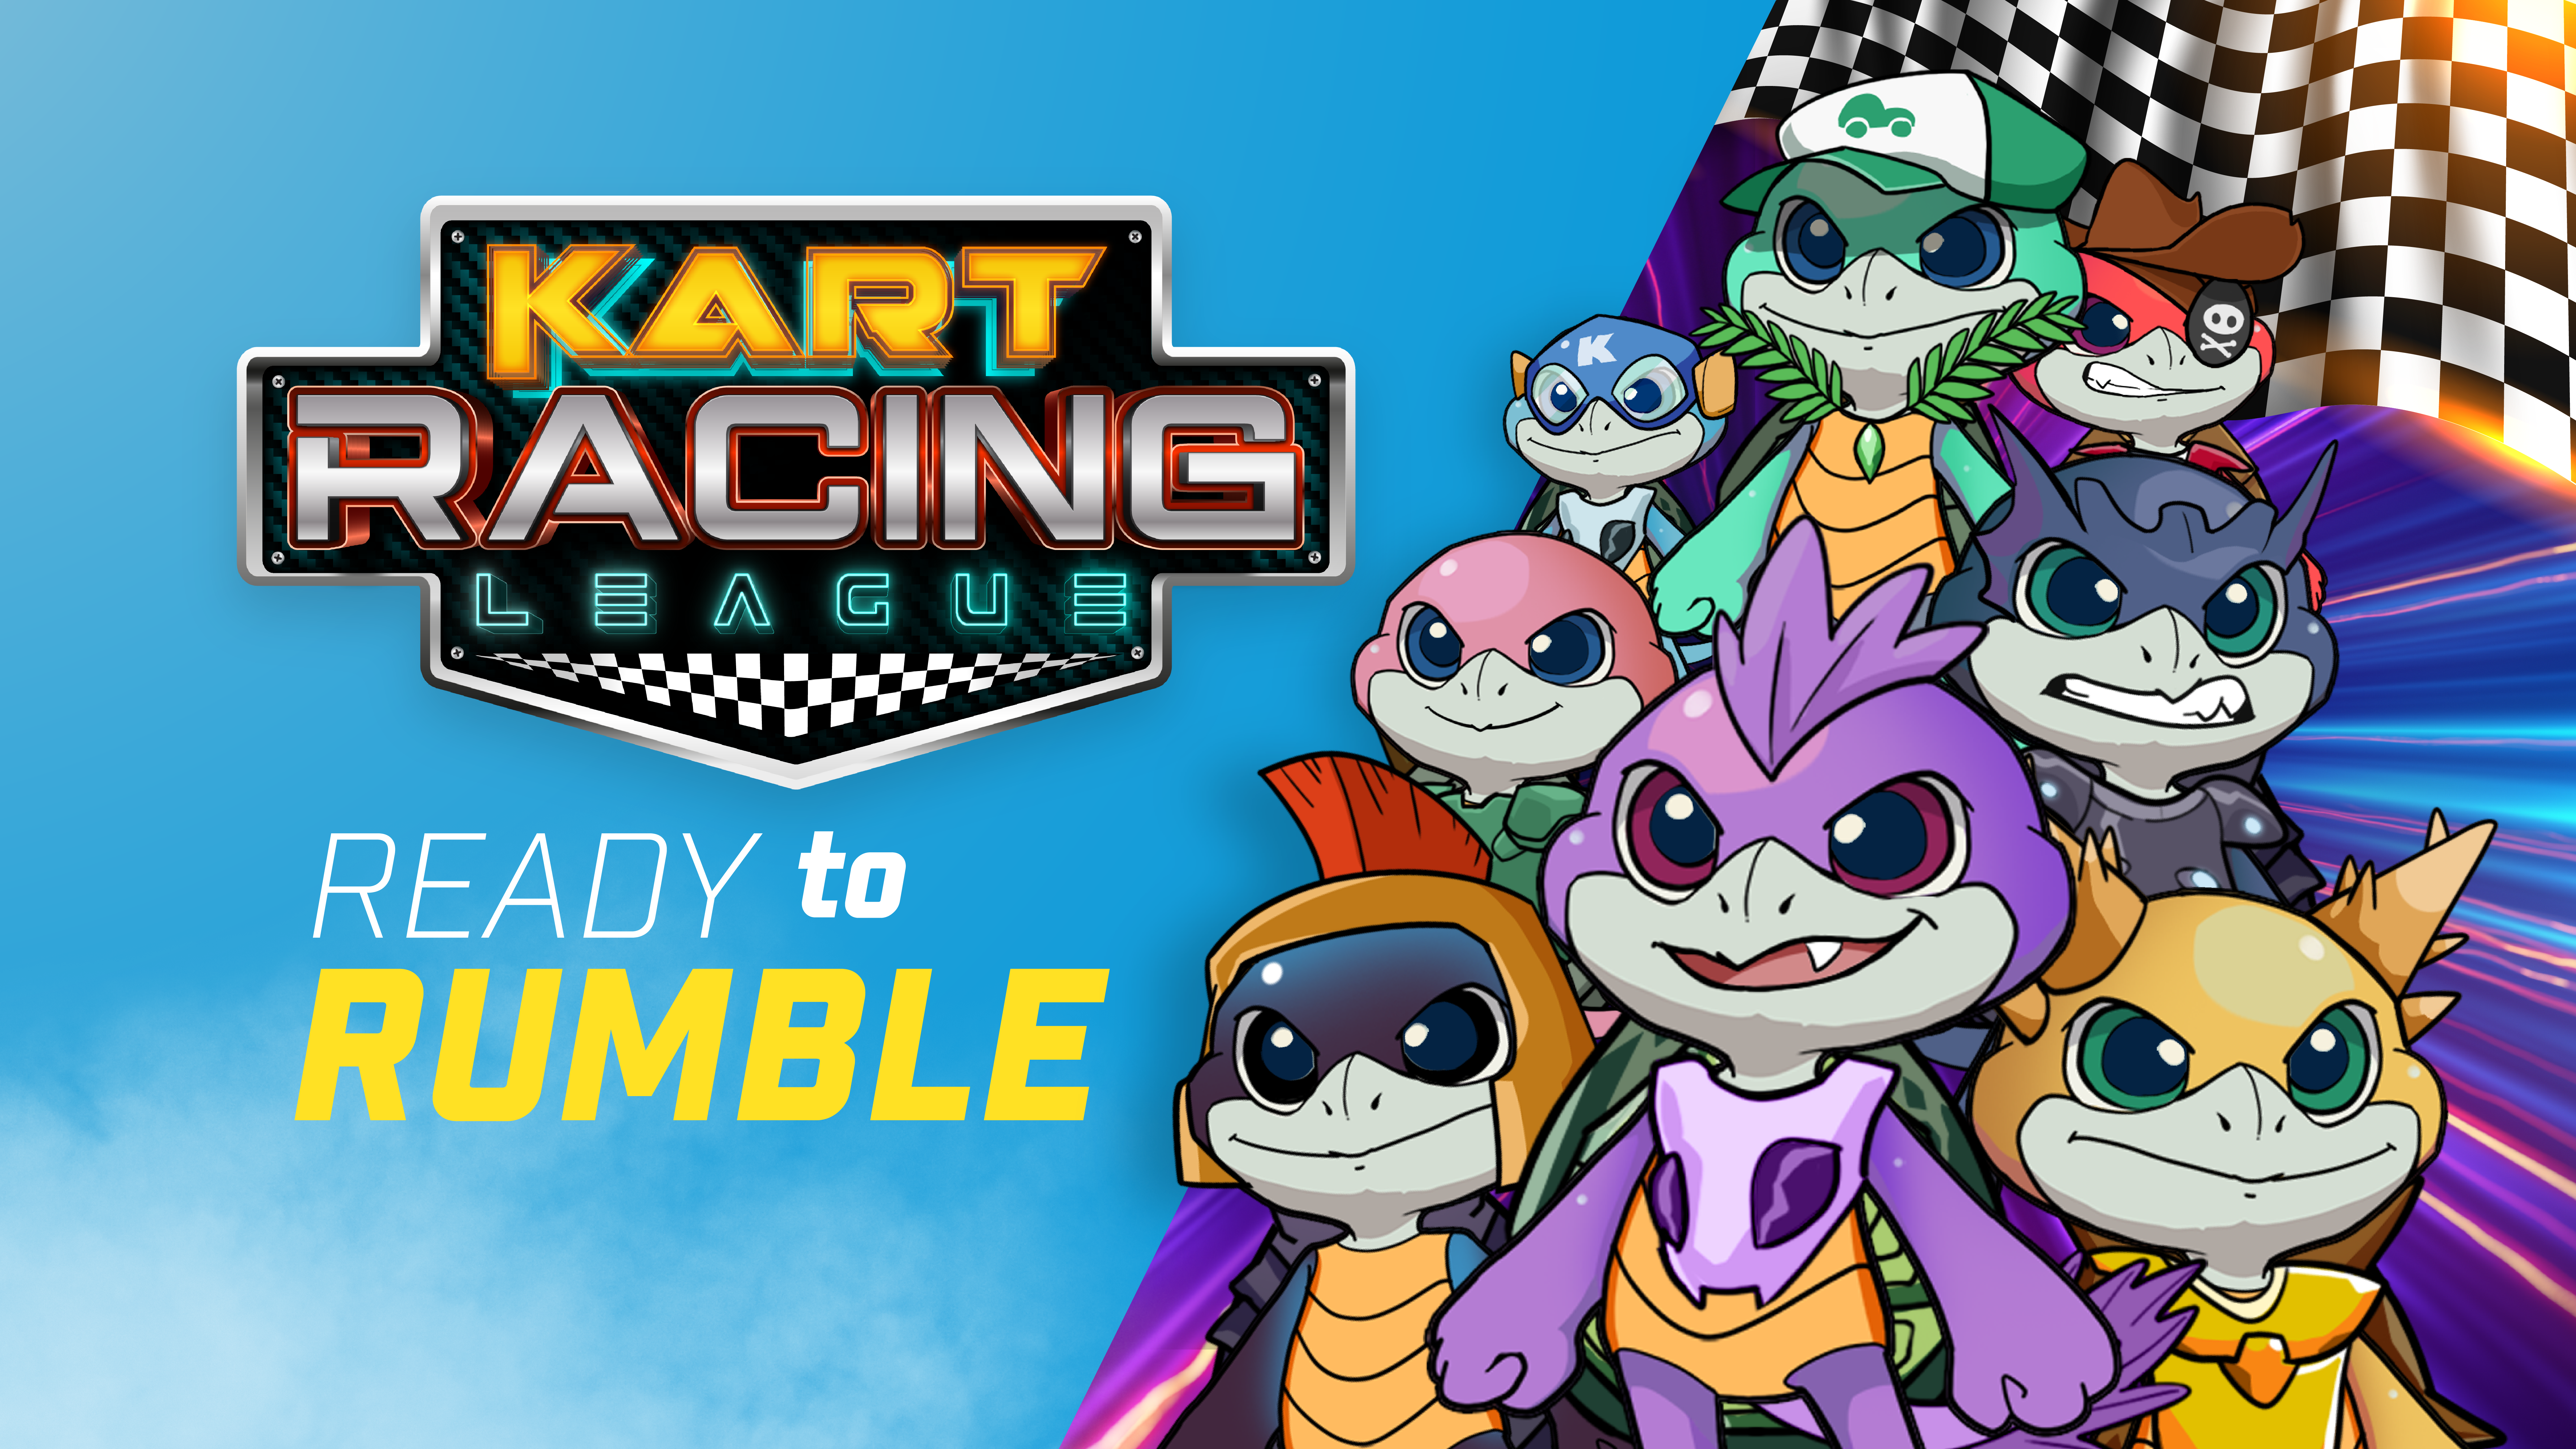 Kart Racing League An Upcoming Gamefi Project Using 3d Nft Characters